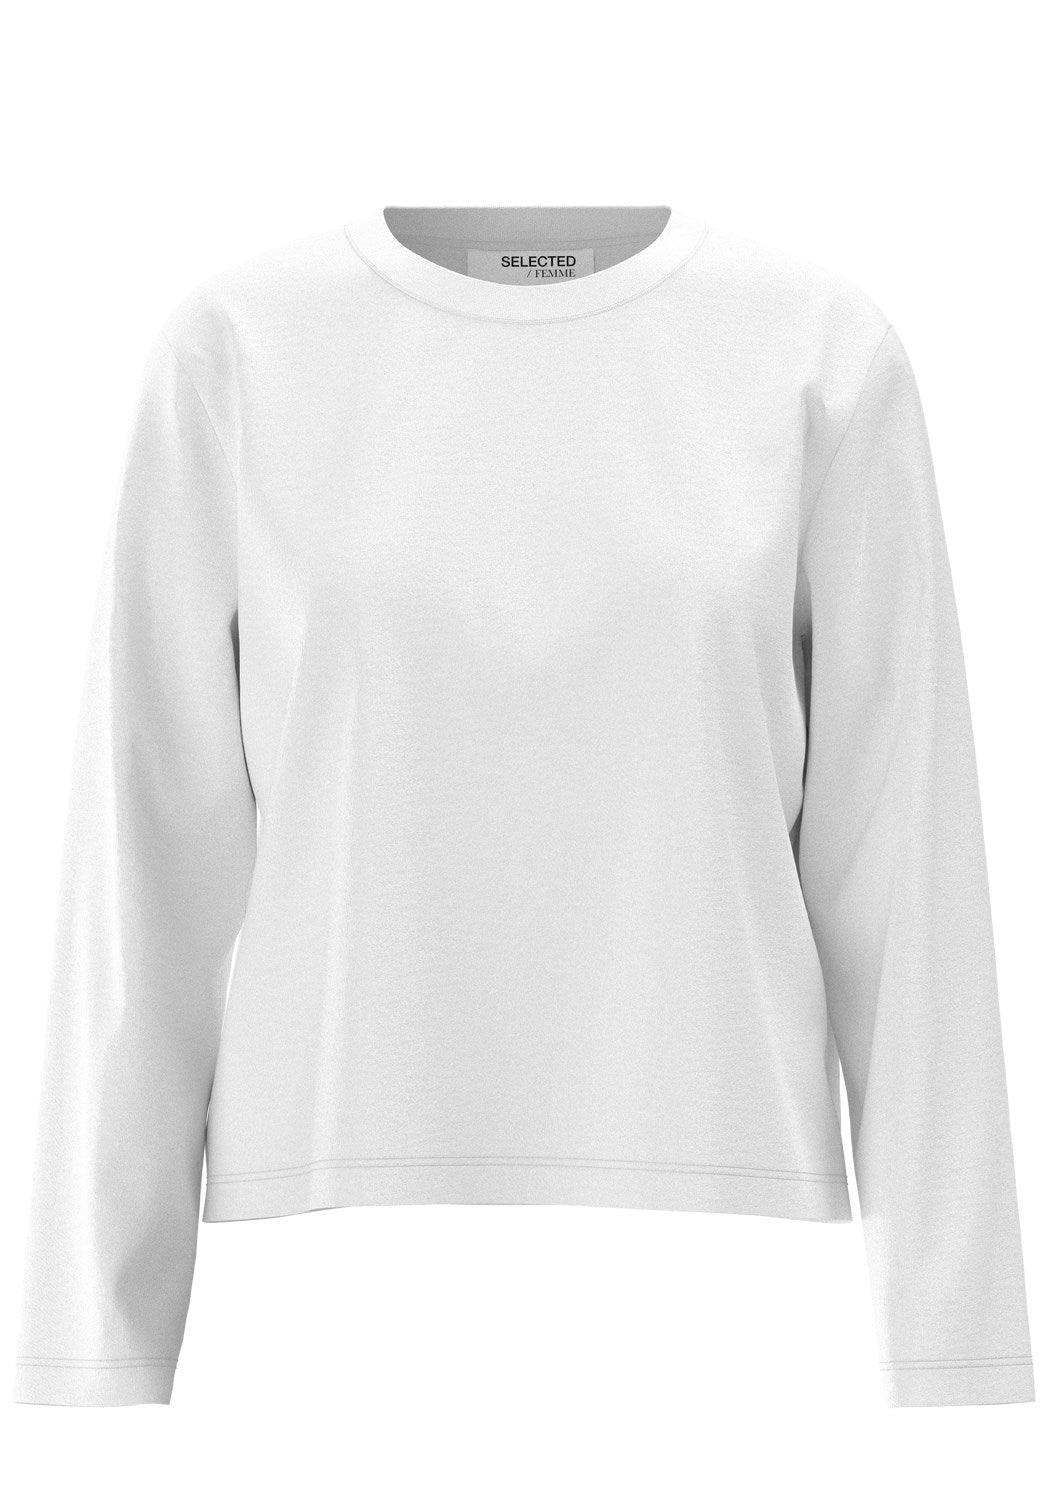 Women's long-sleeved organic cotton T-shirt